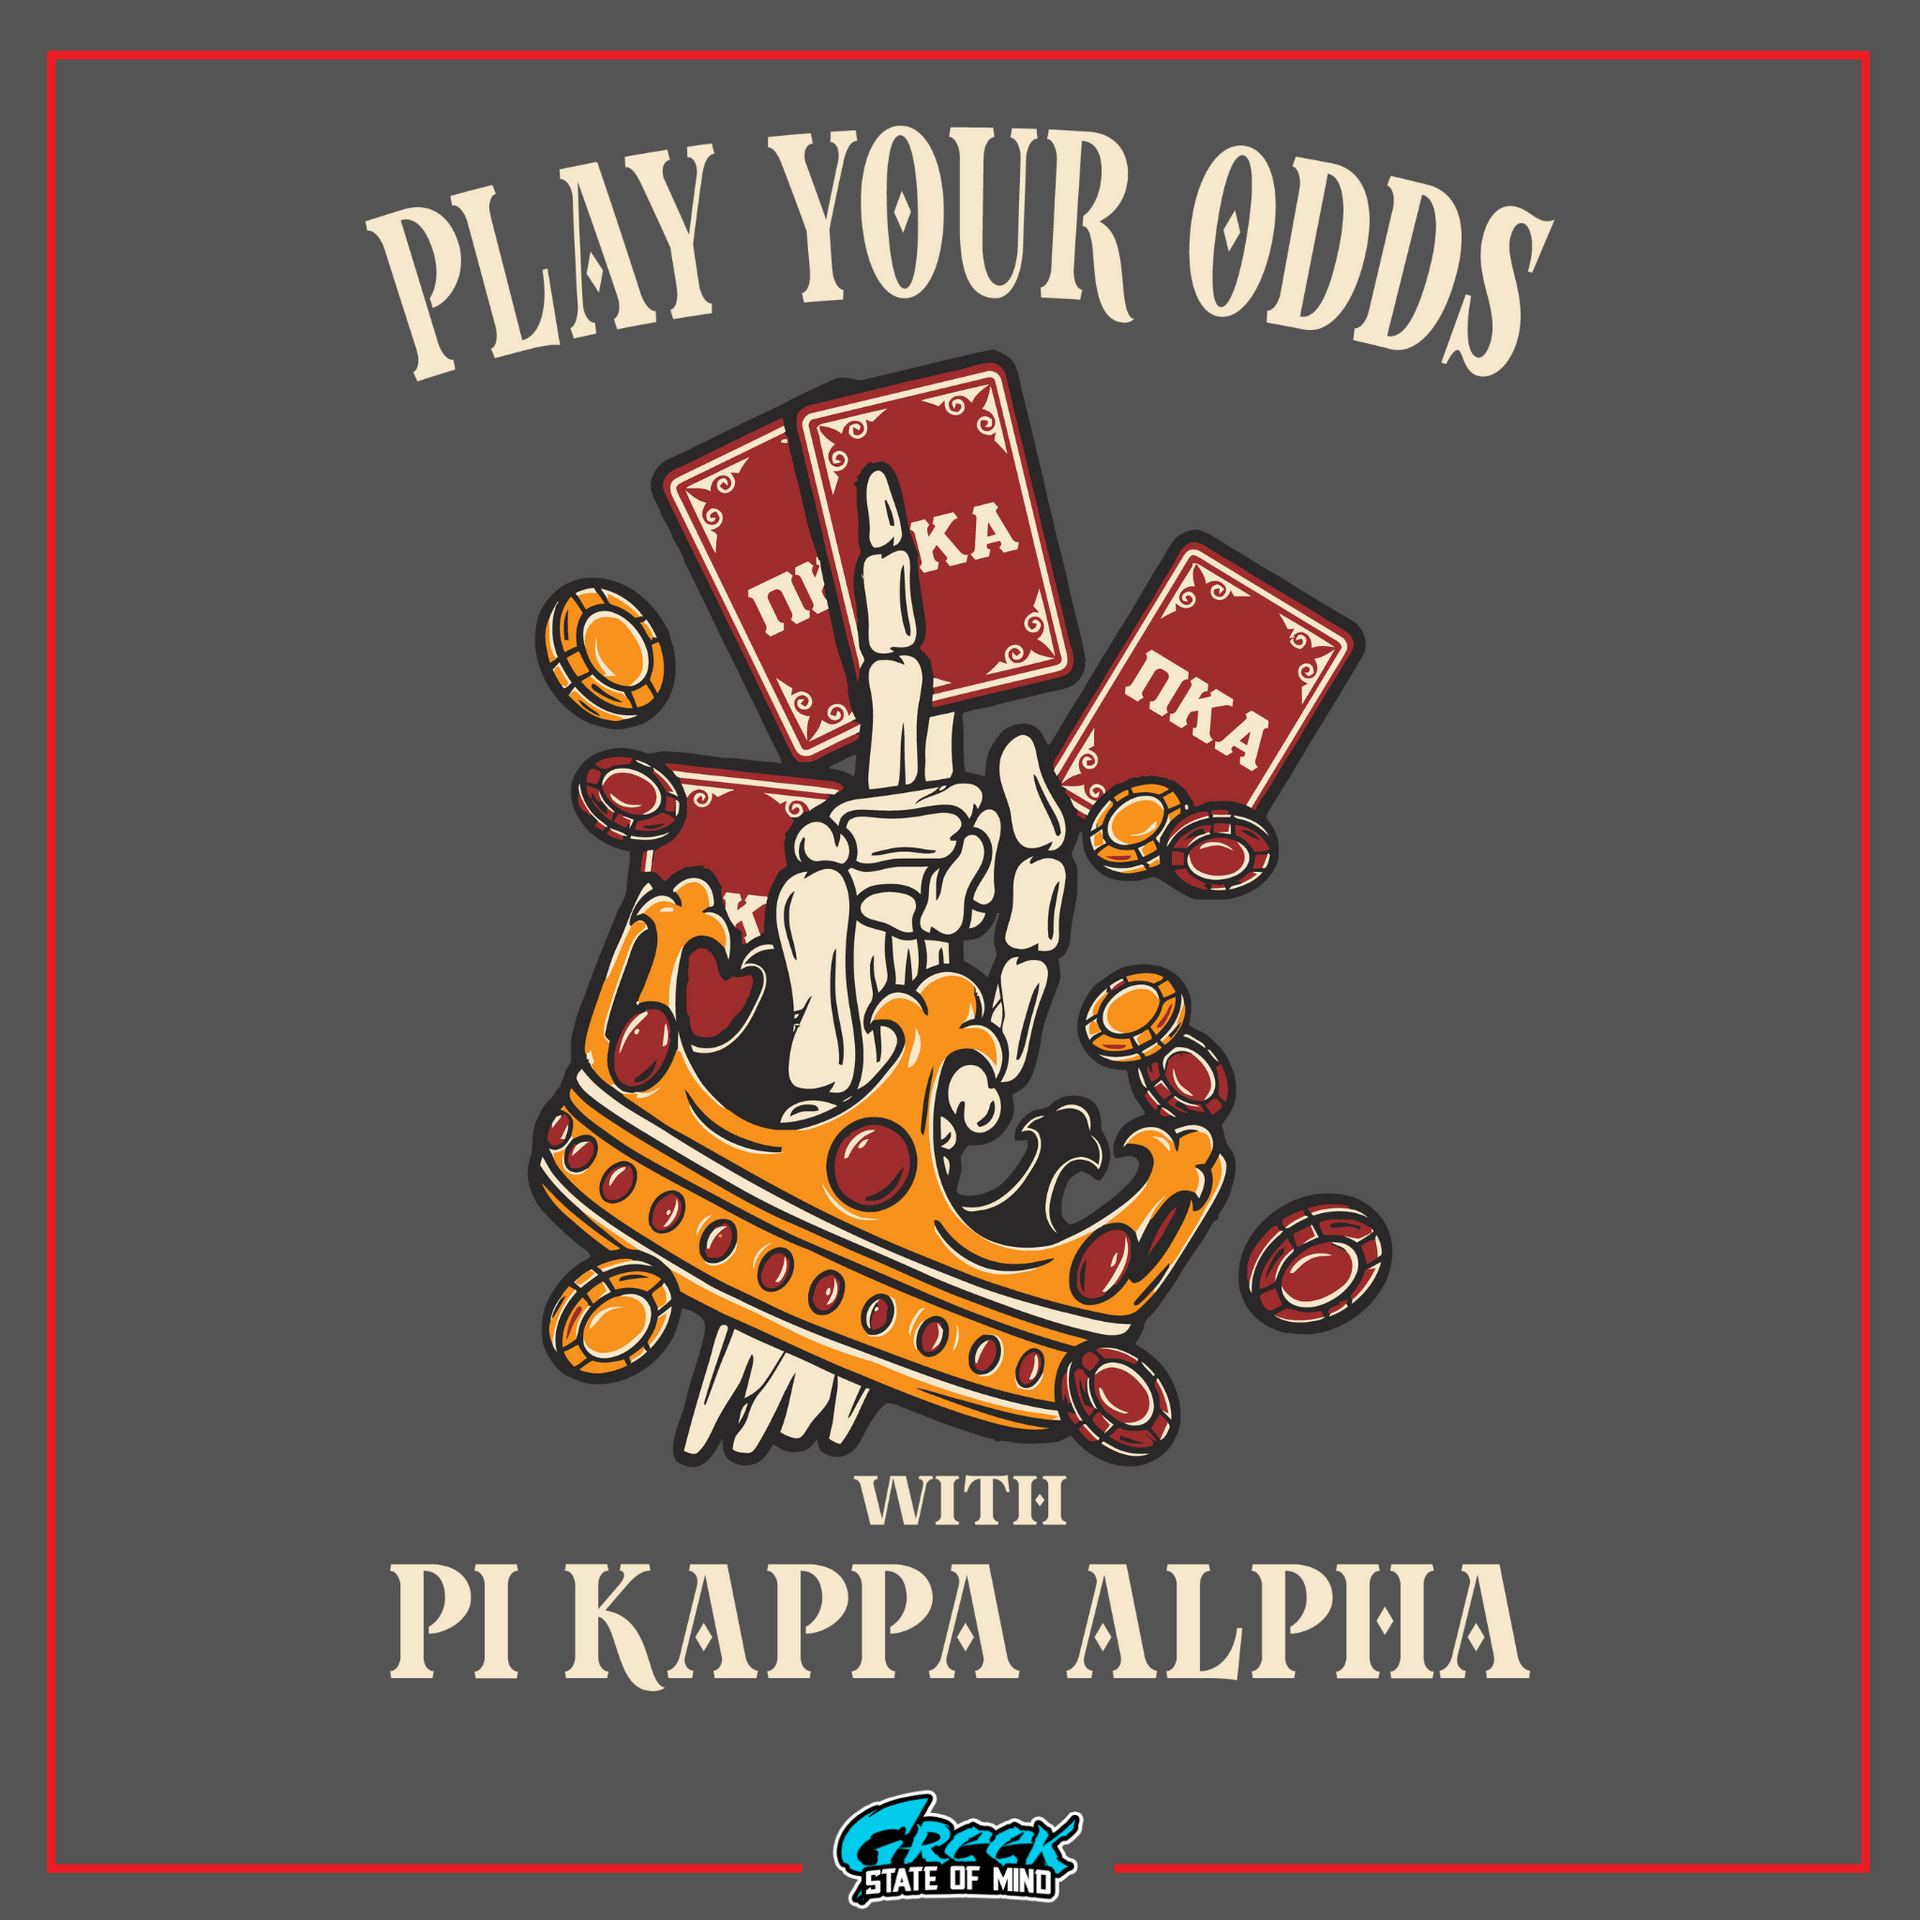 Pi Kappa Alpha Graphic Long Sleeve | Play Your Odds | Pi kappa alpha fraternity shirt design 